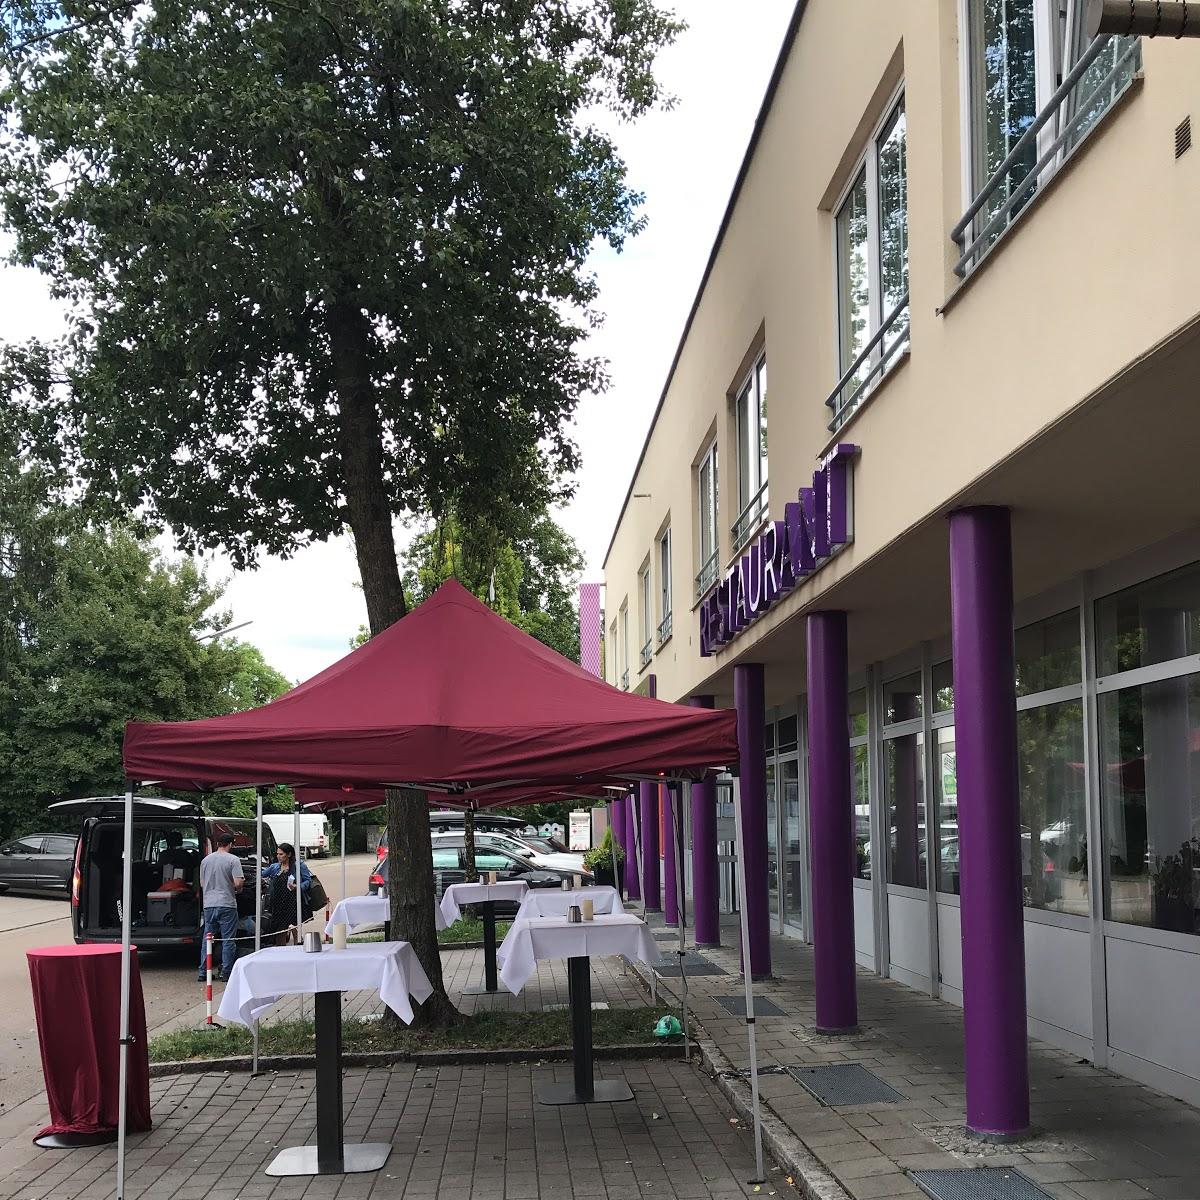 Restaurant "RESTAURANT ESSZIMMER" in  Regensburg